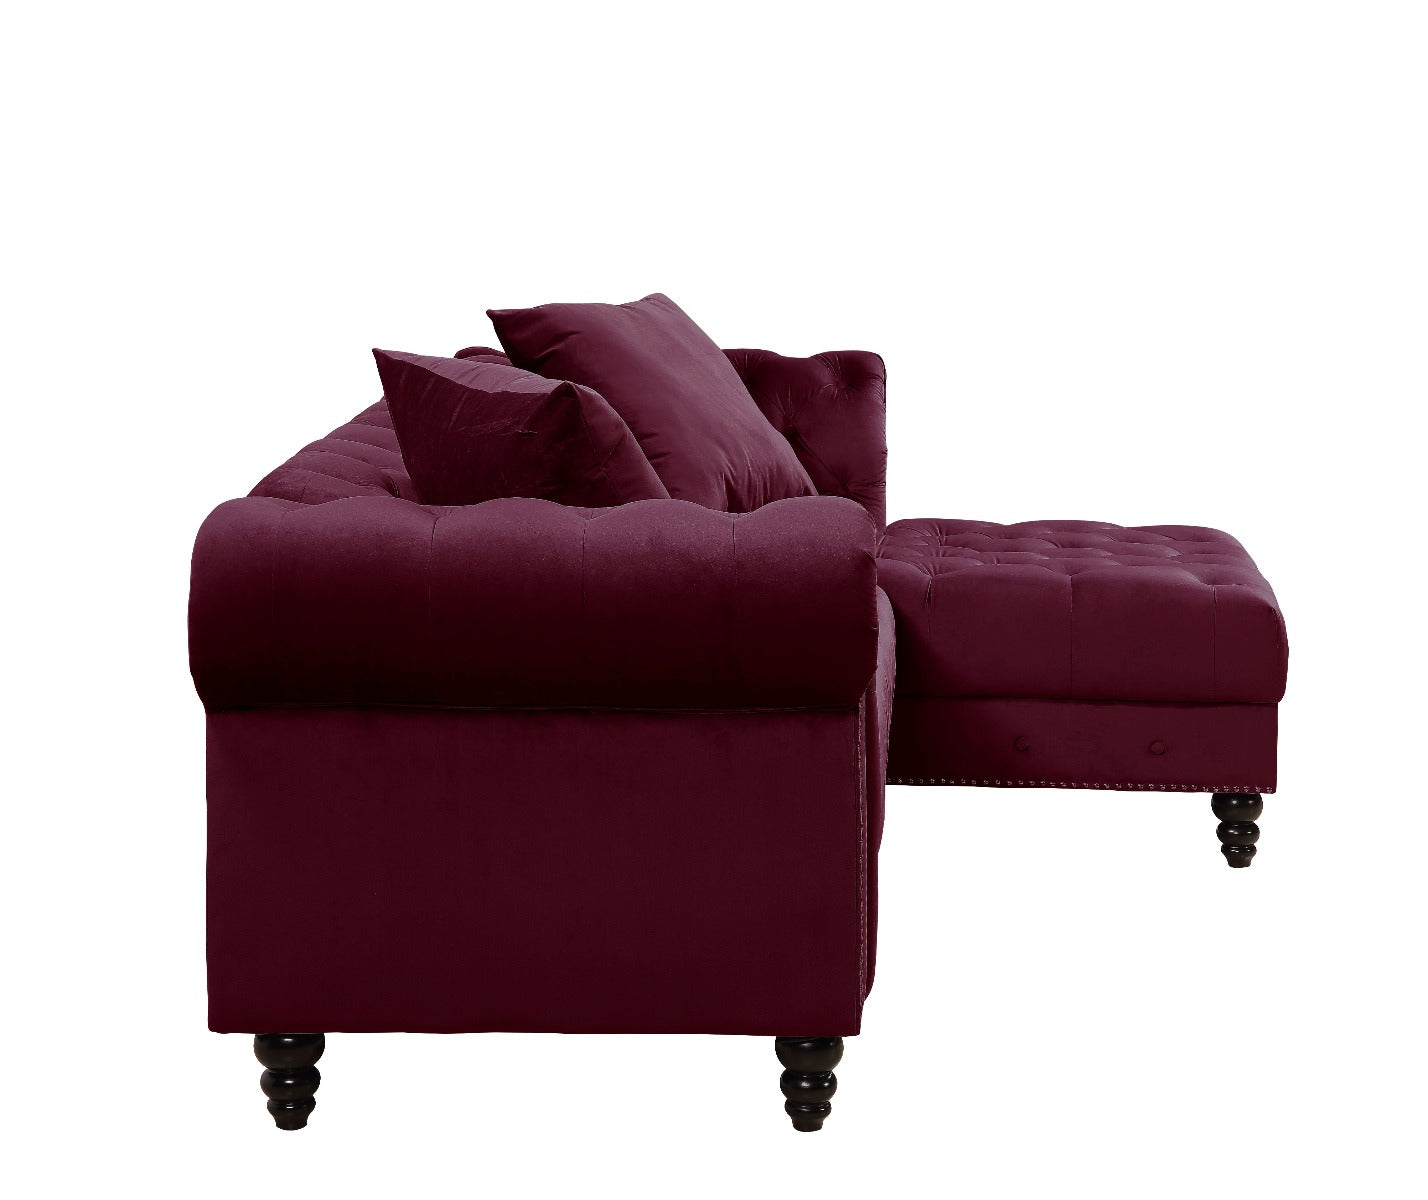 ACME Furniture Sofas & Couches - ACME Adnelis Sectional Sofa w/2 Pillows, Red Velvet